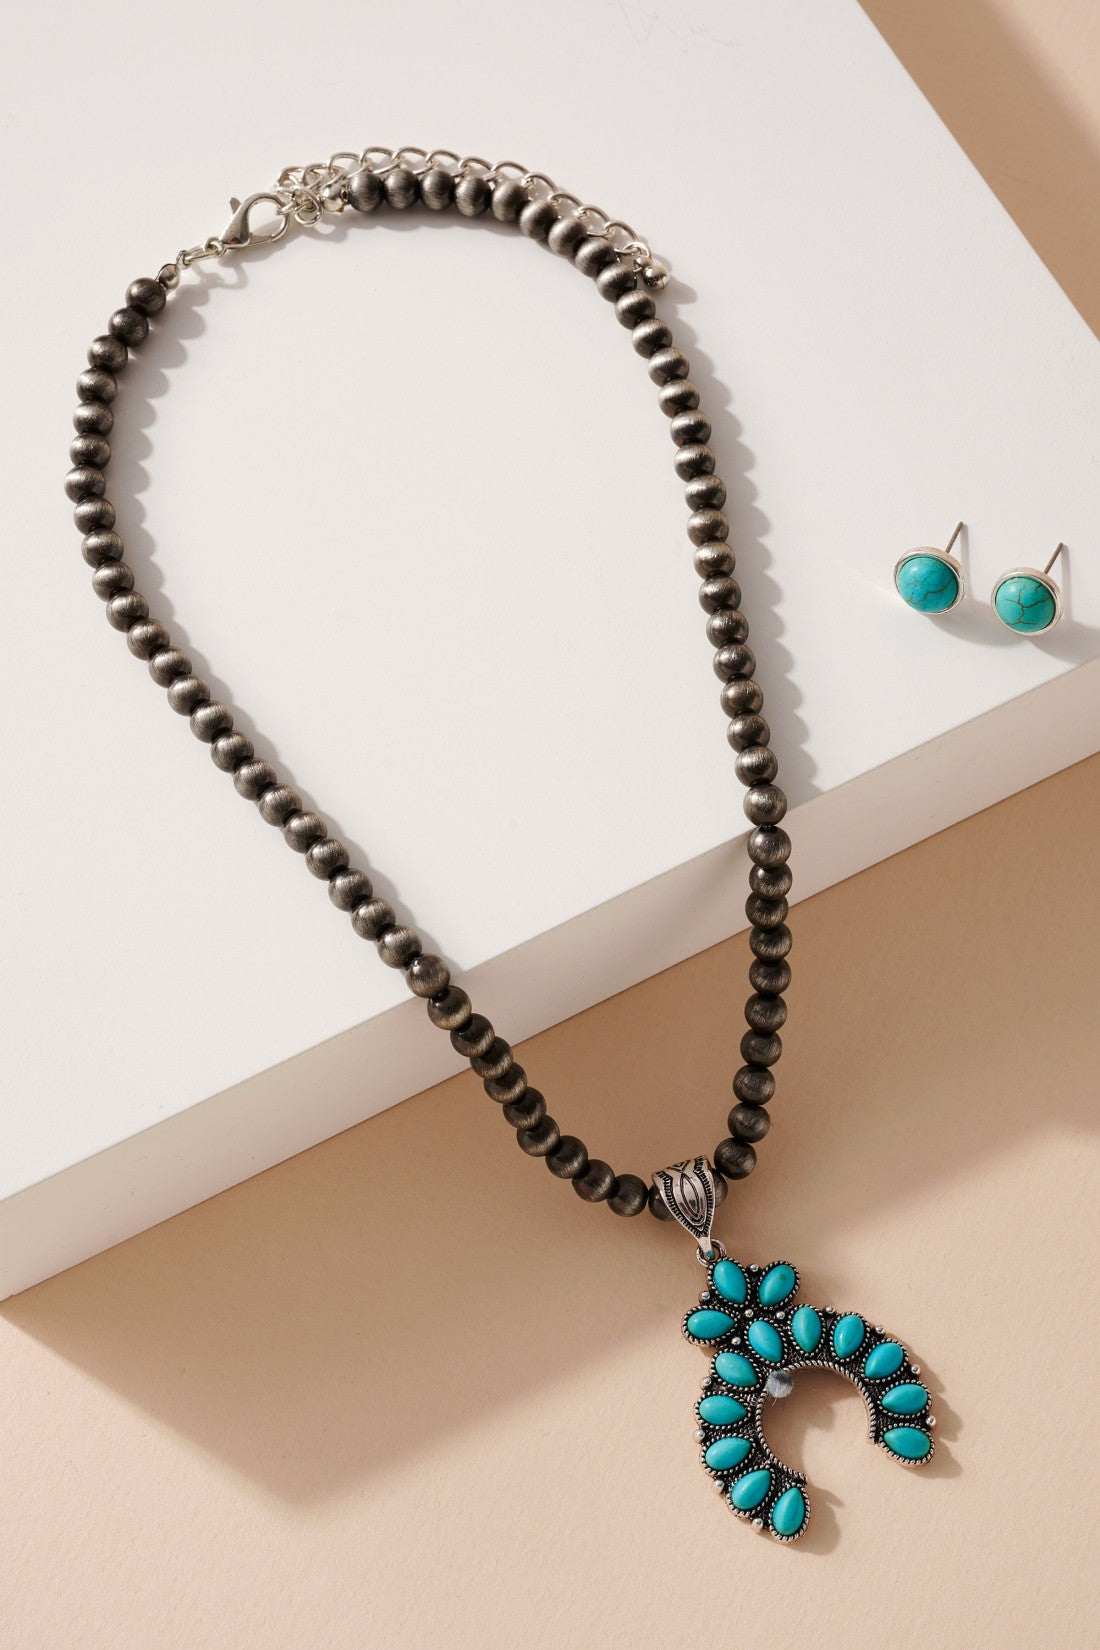 Western Navajo Bead Necklace costume jewelry